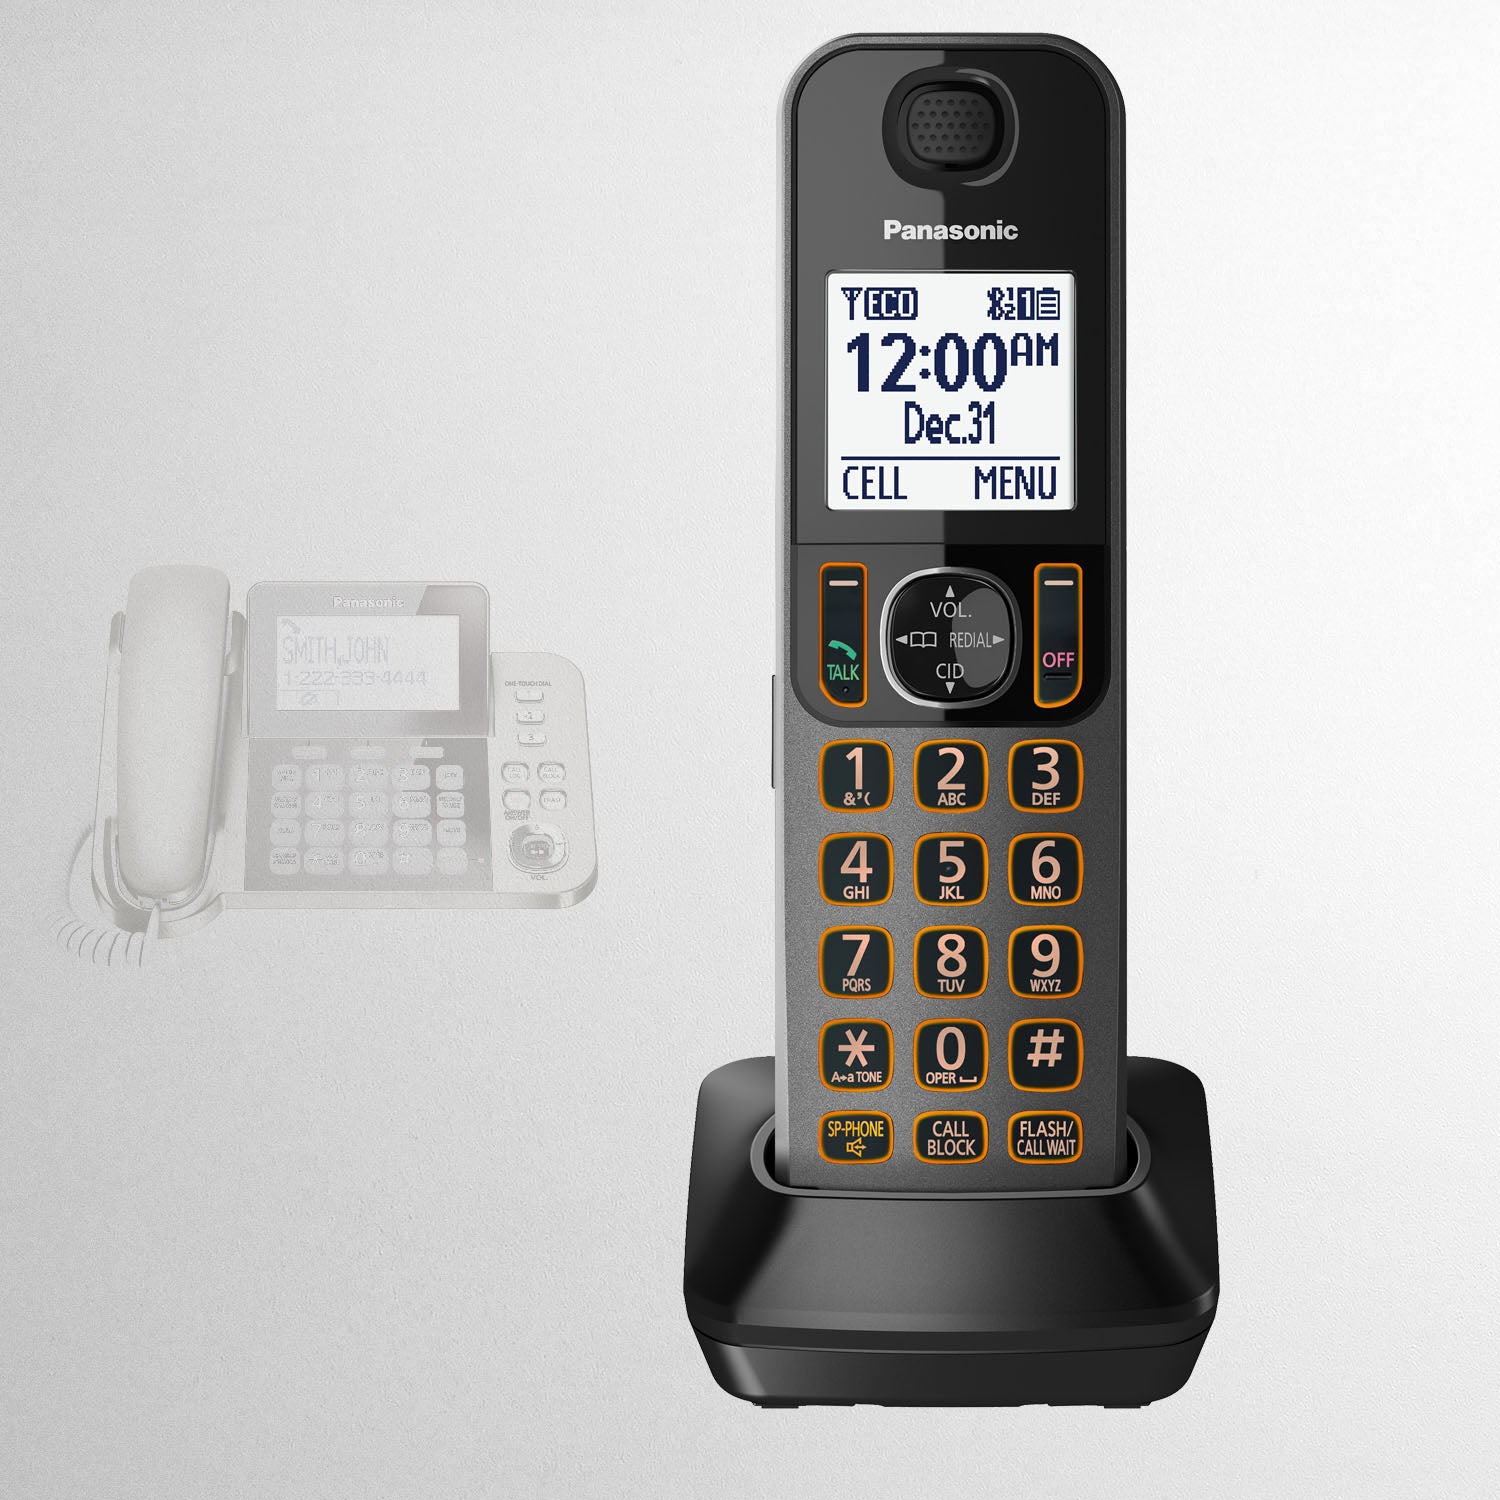 Panasonic Cordless Phone Accessory Handset for TGD3 Series 